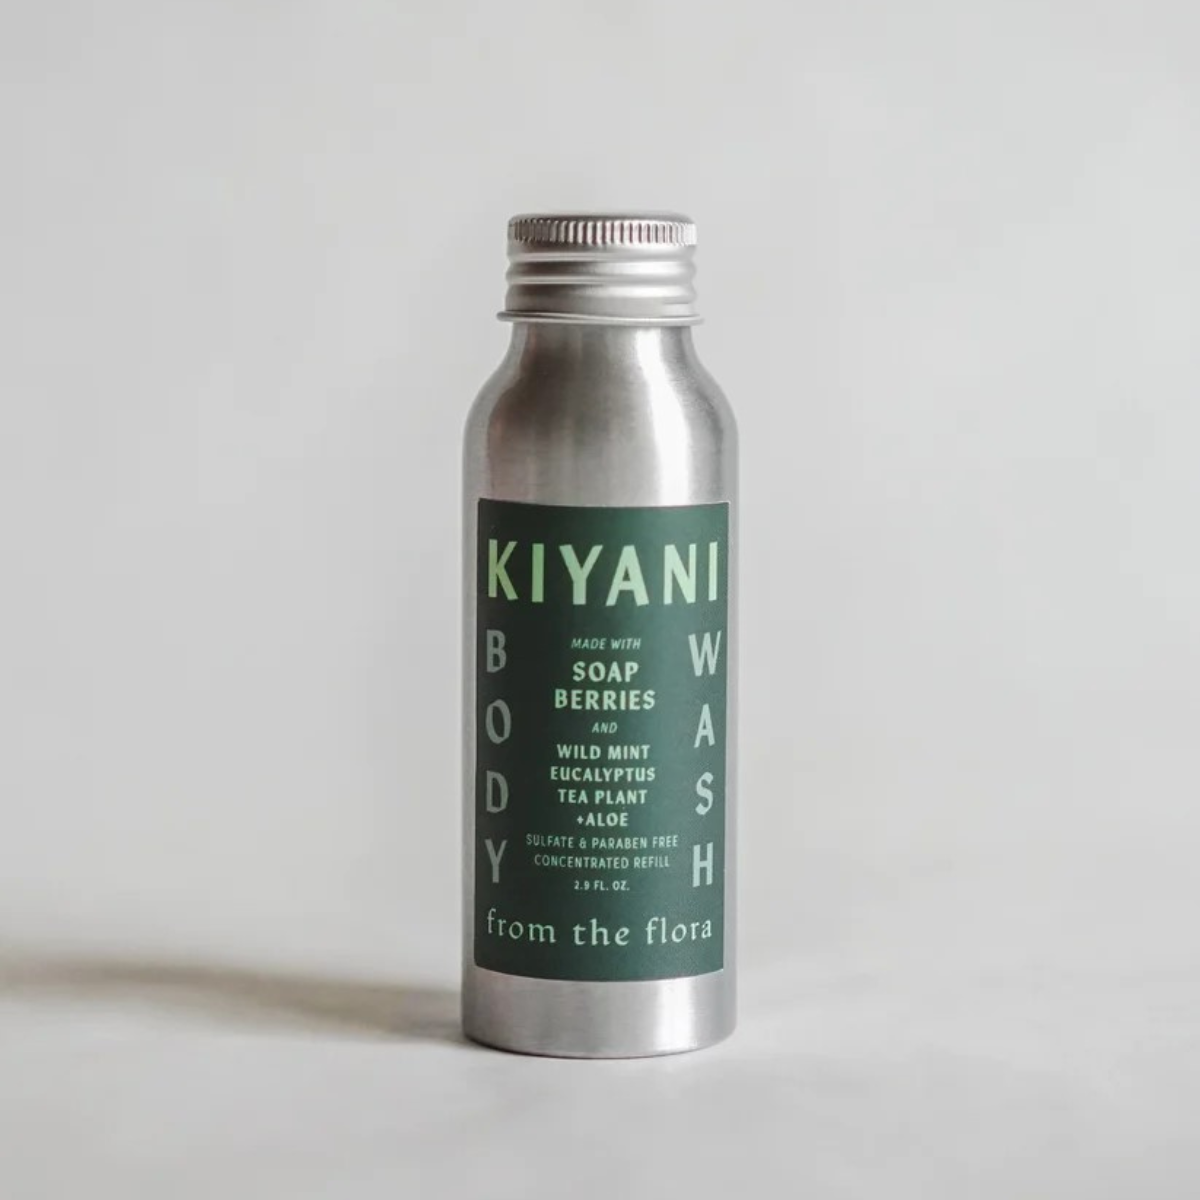 Kiyani Body Soap Refill